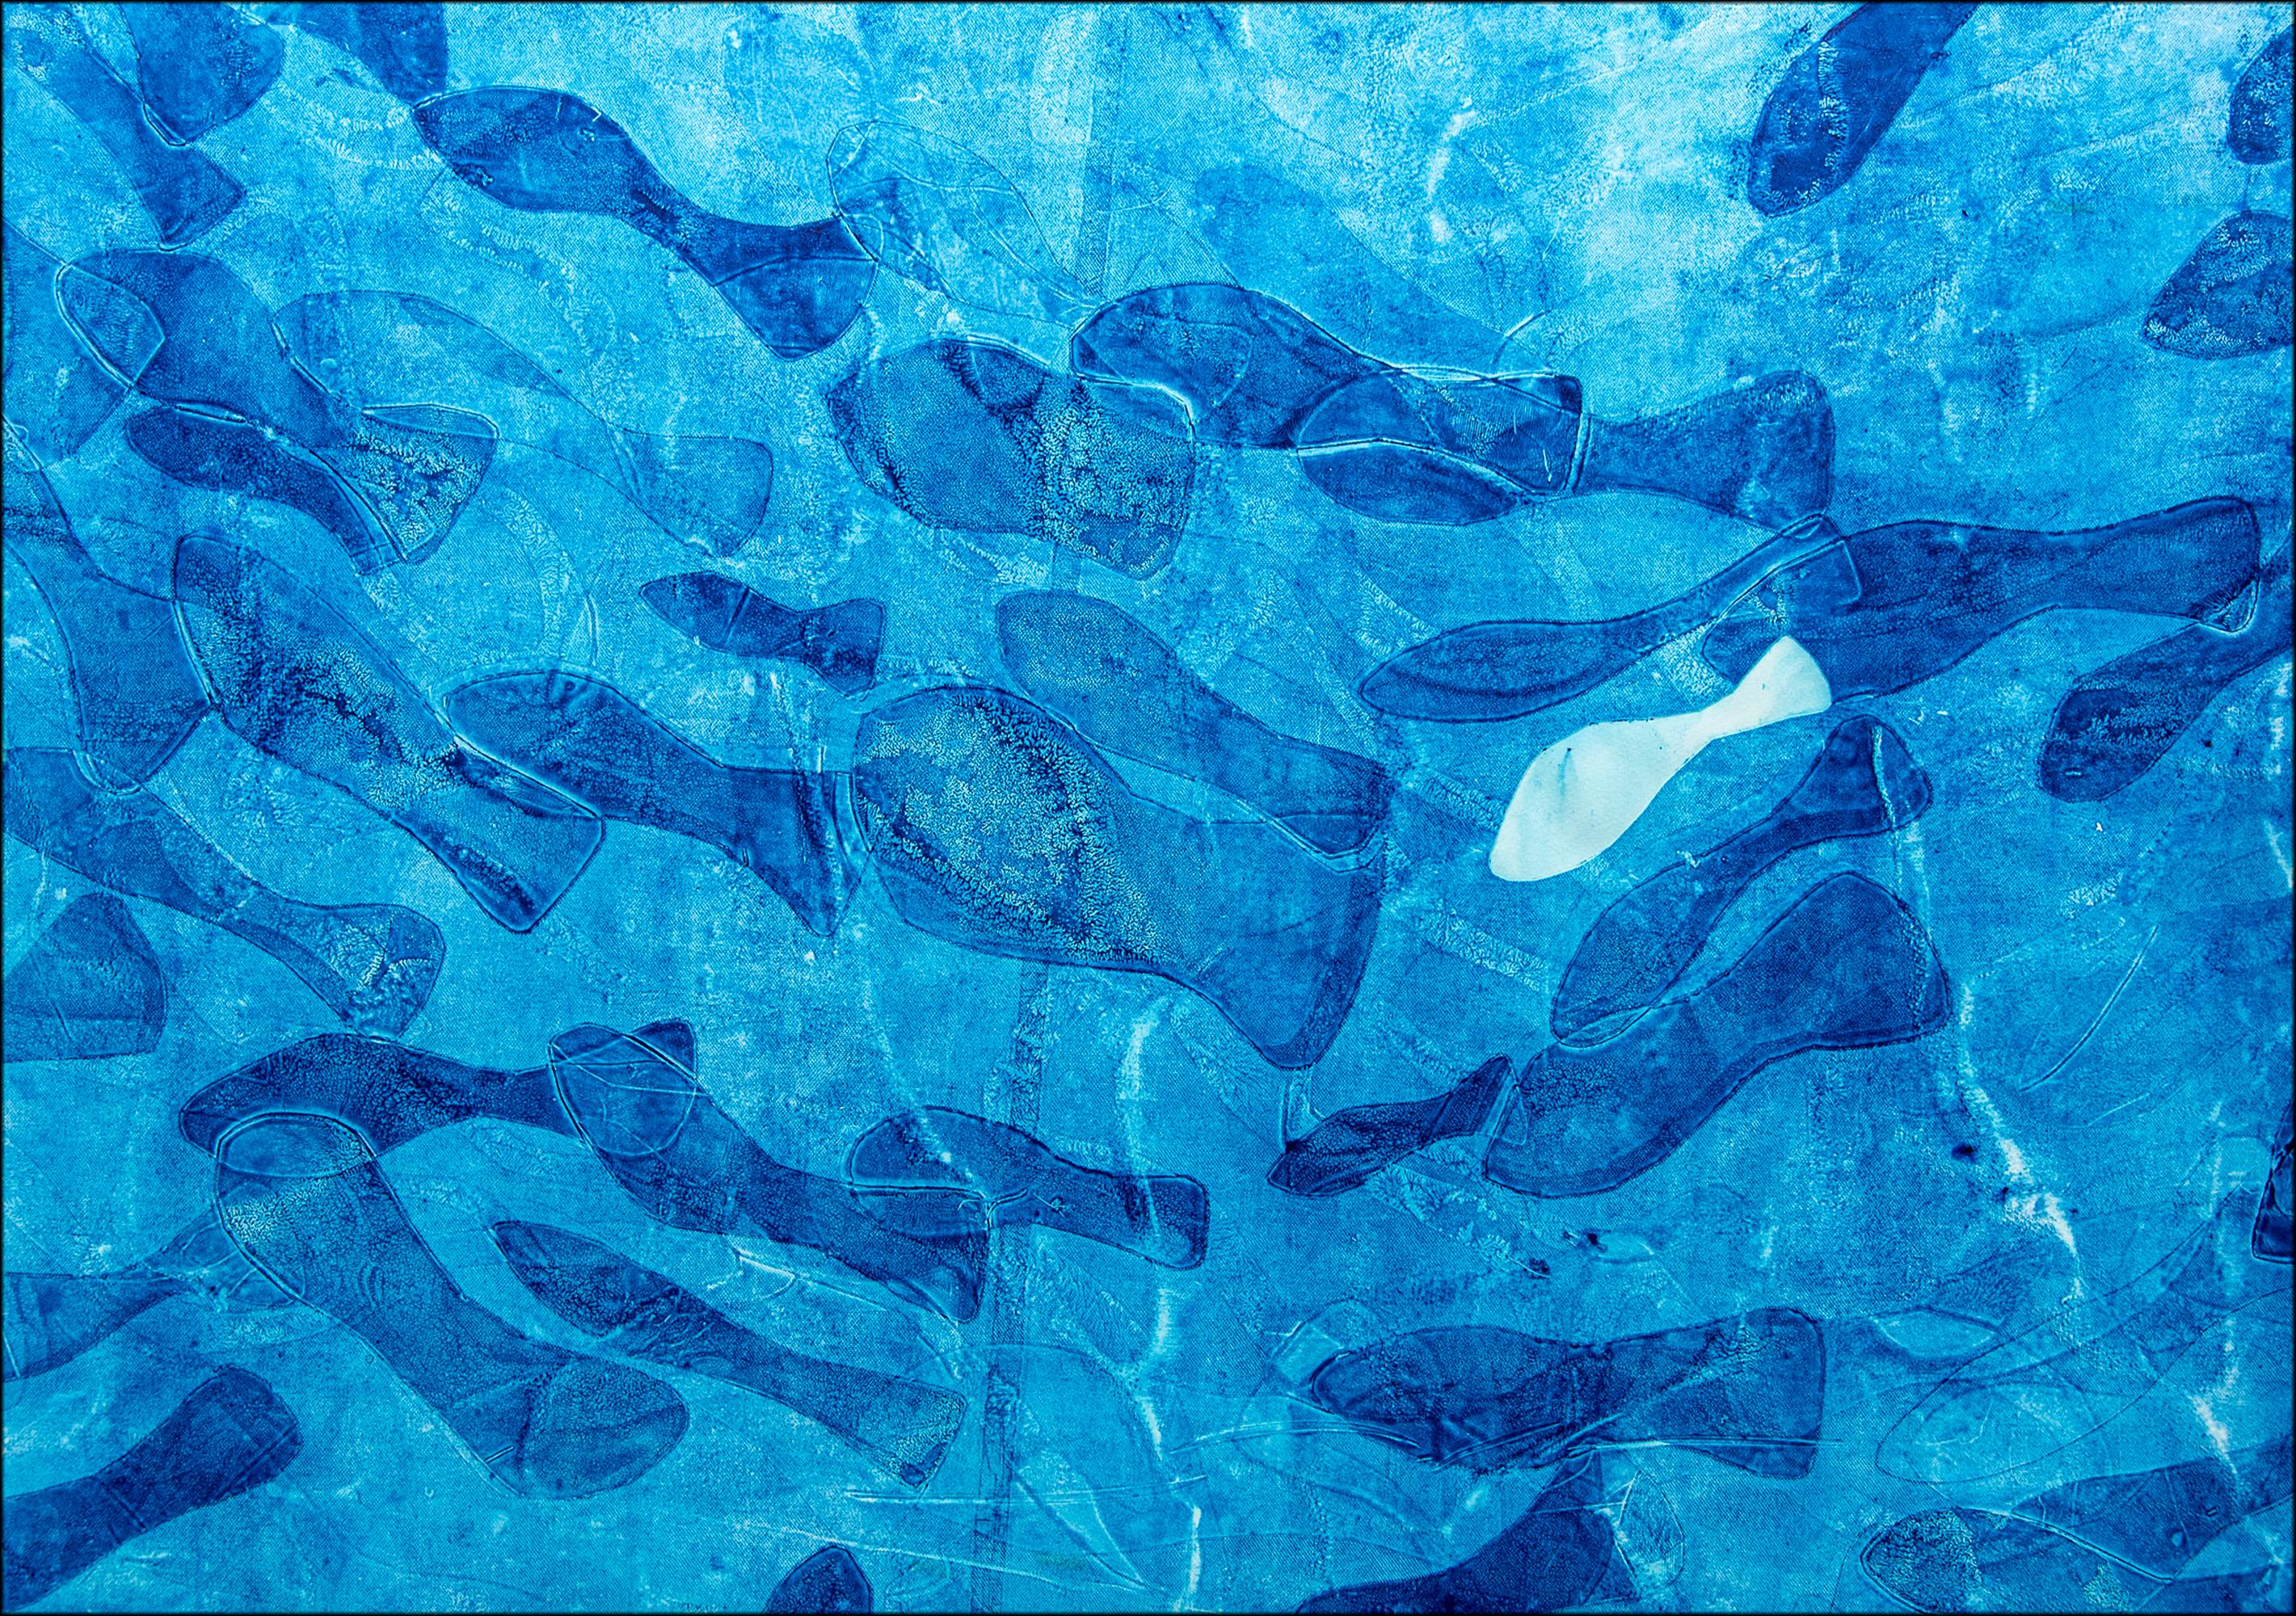 Enric Servera Abstract Painting – Blaue Töne, Abstraktes figuratives Gemälde von  Fischmuster, Meereslandschaft auf Papier 